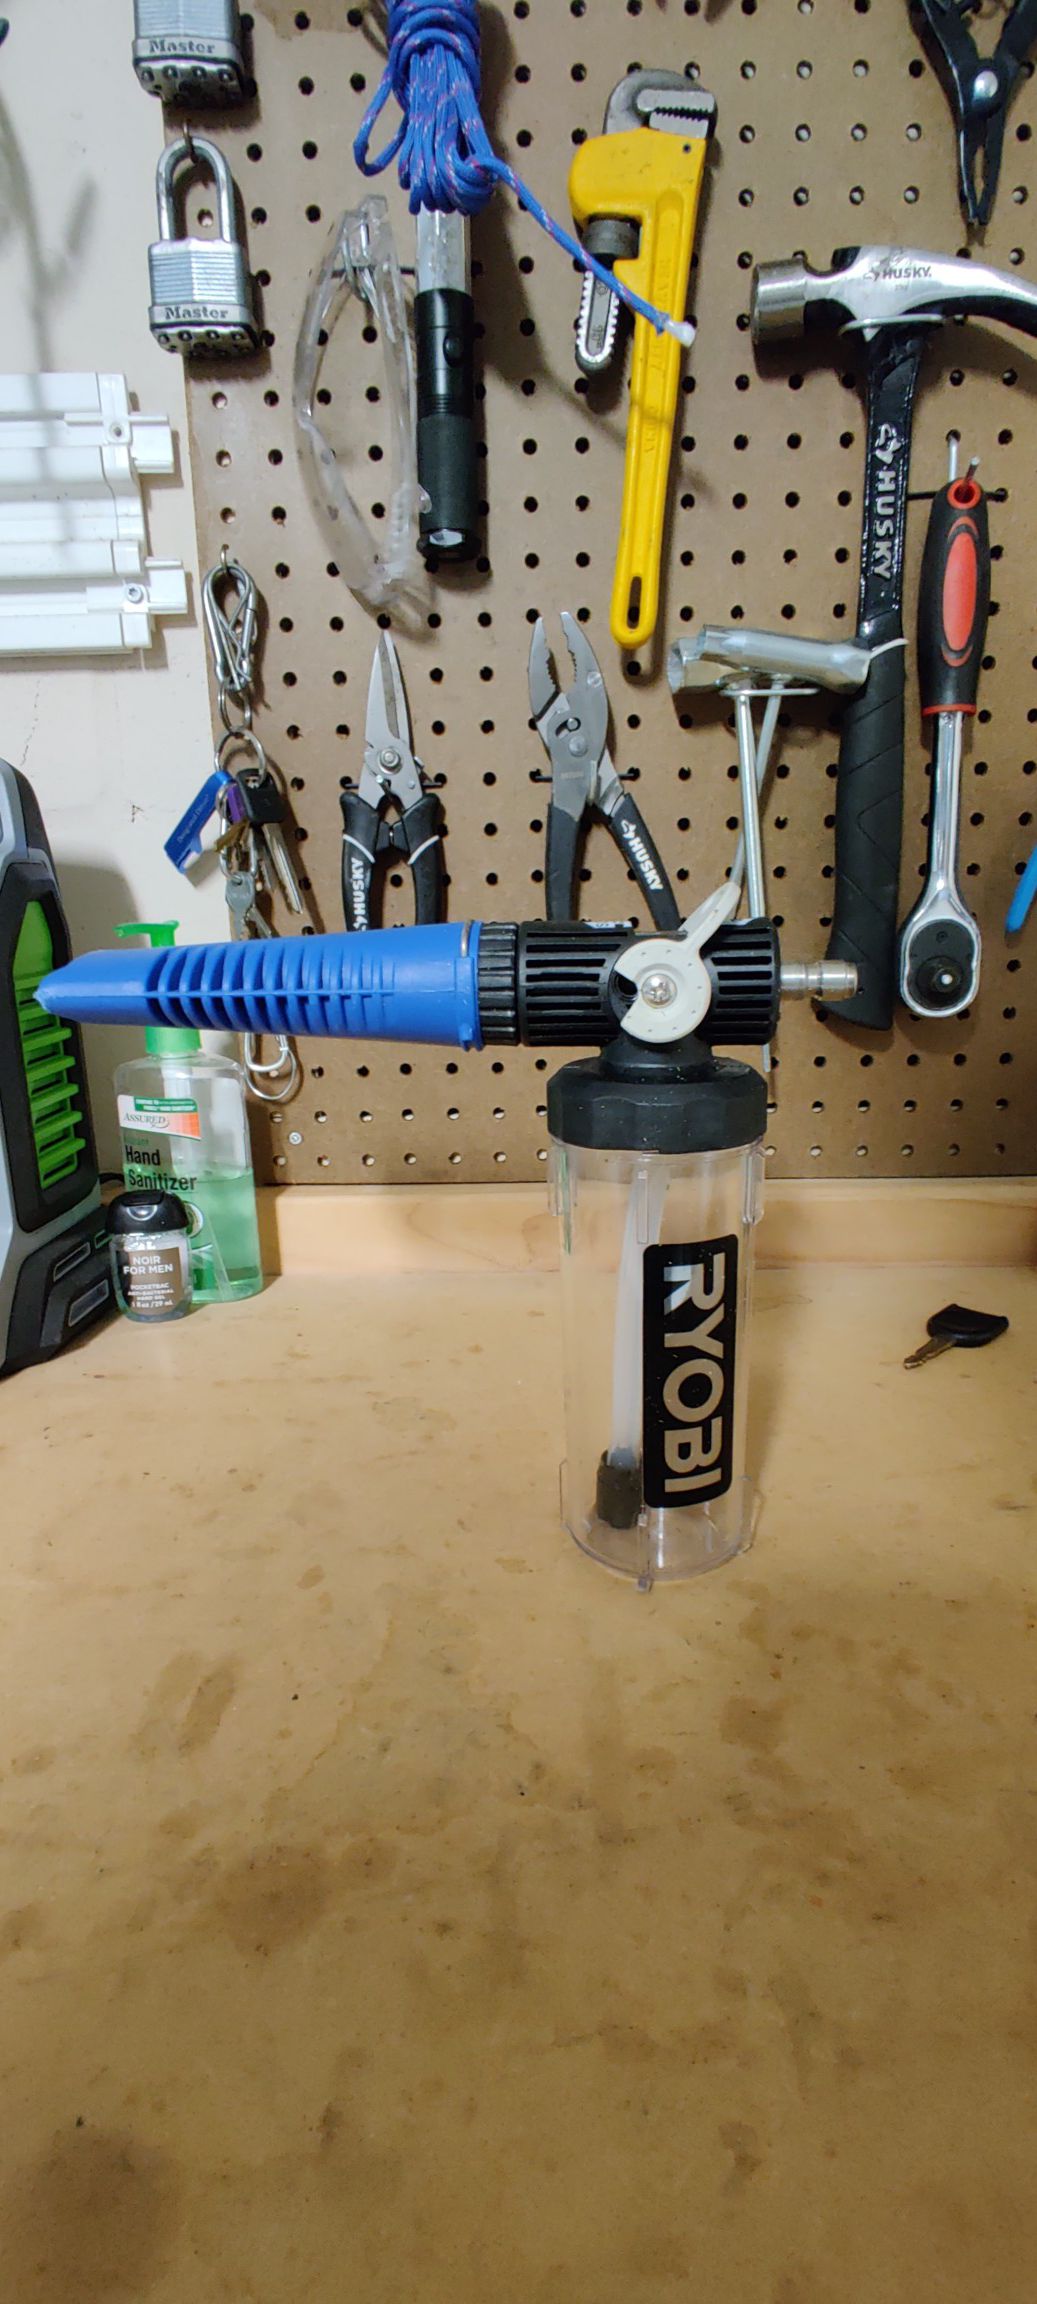 RYOBI Pressure Washer Foam Blaster